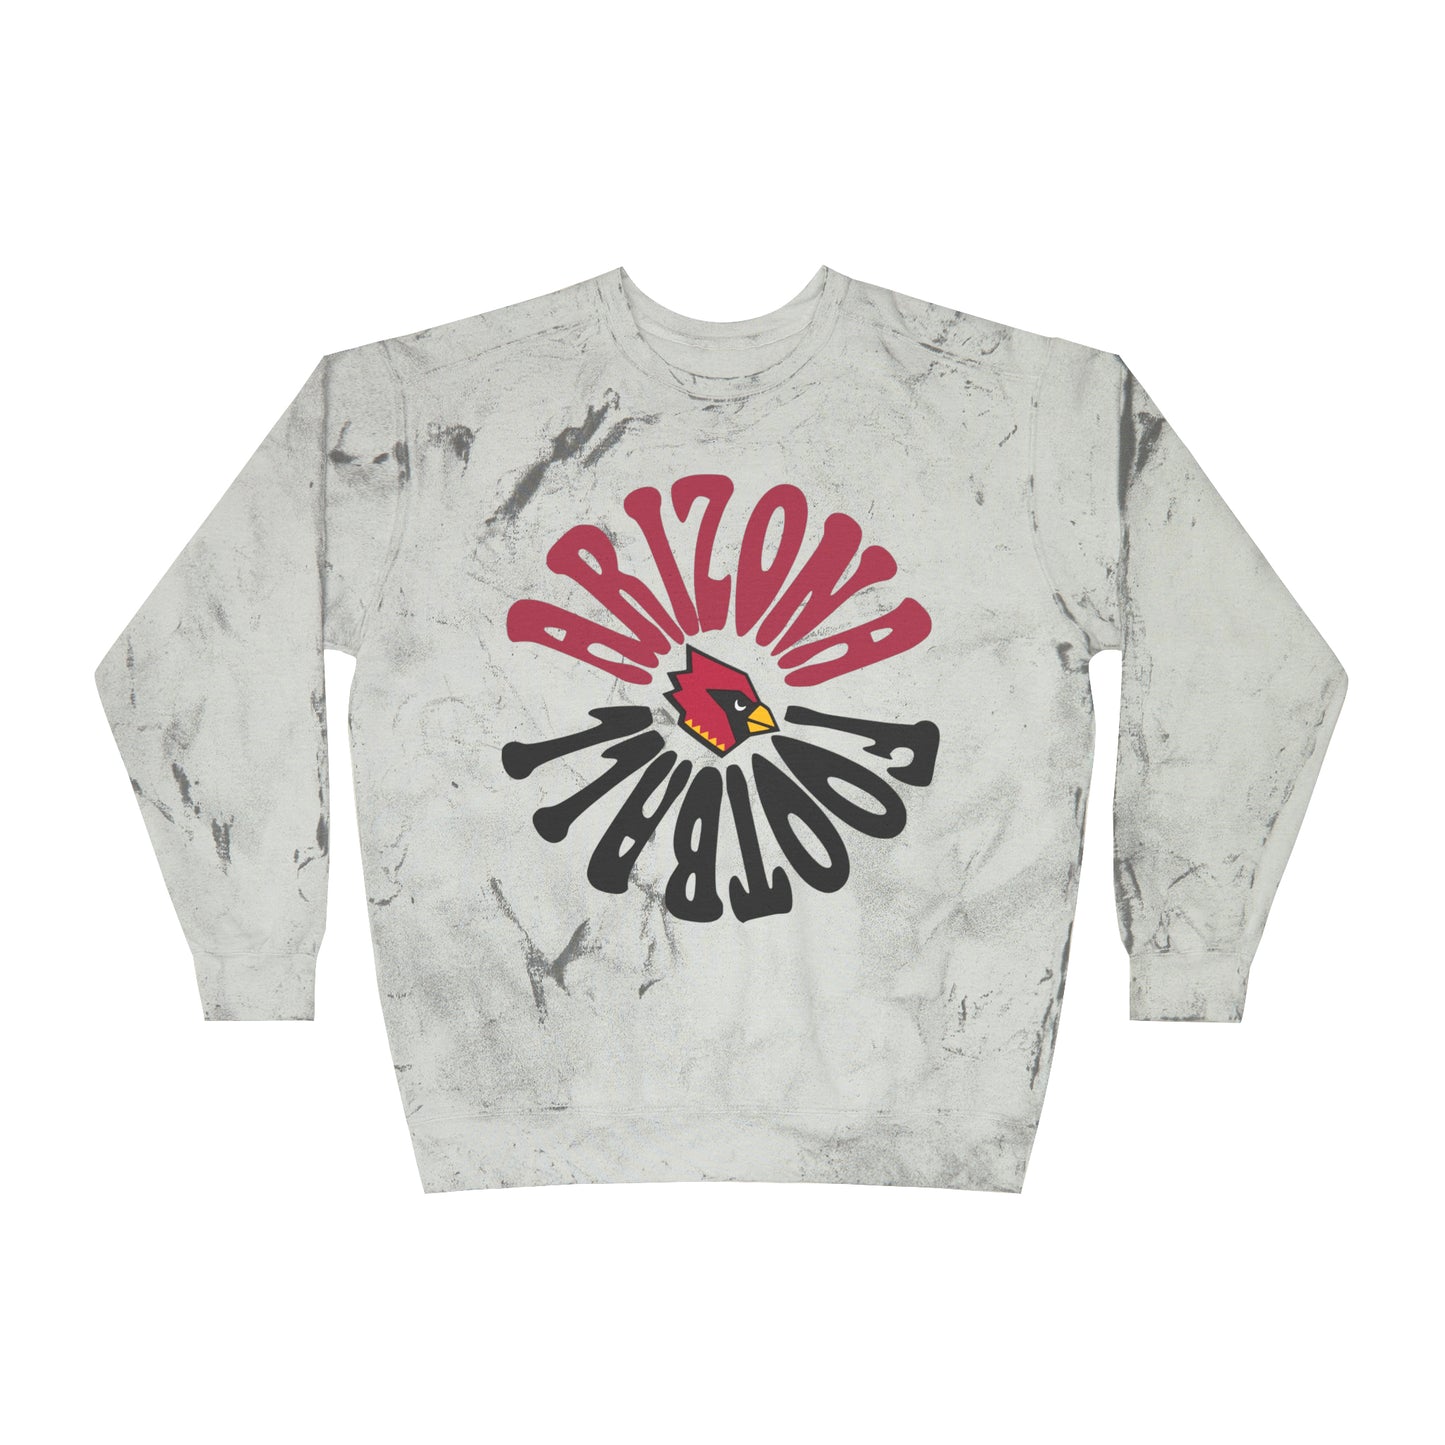 Tie Dye Comfort Colors Hippy Retro Arizona Cardinals Sweatshirt - Vintage Football Crewneck - Men's & Women's - Design 2